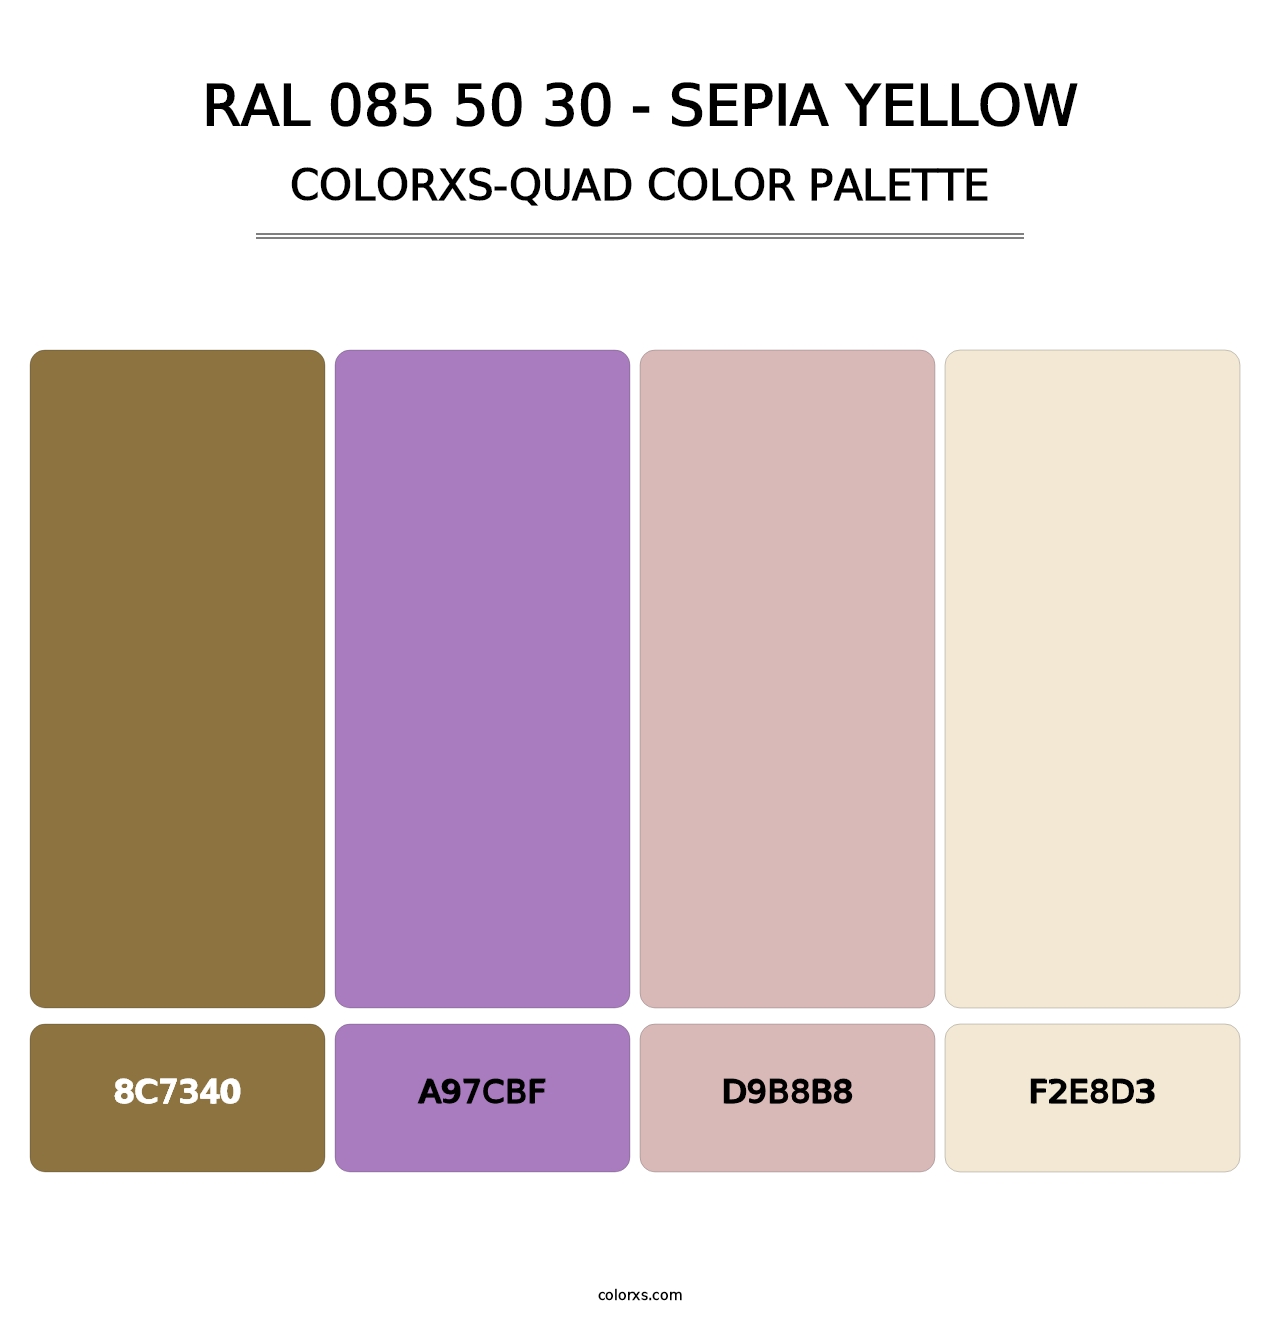 RAL 085 50 30 - Sepia Yellow - Colorxs Quad Palette